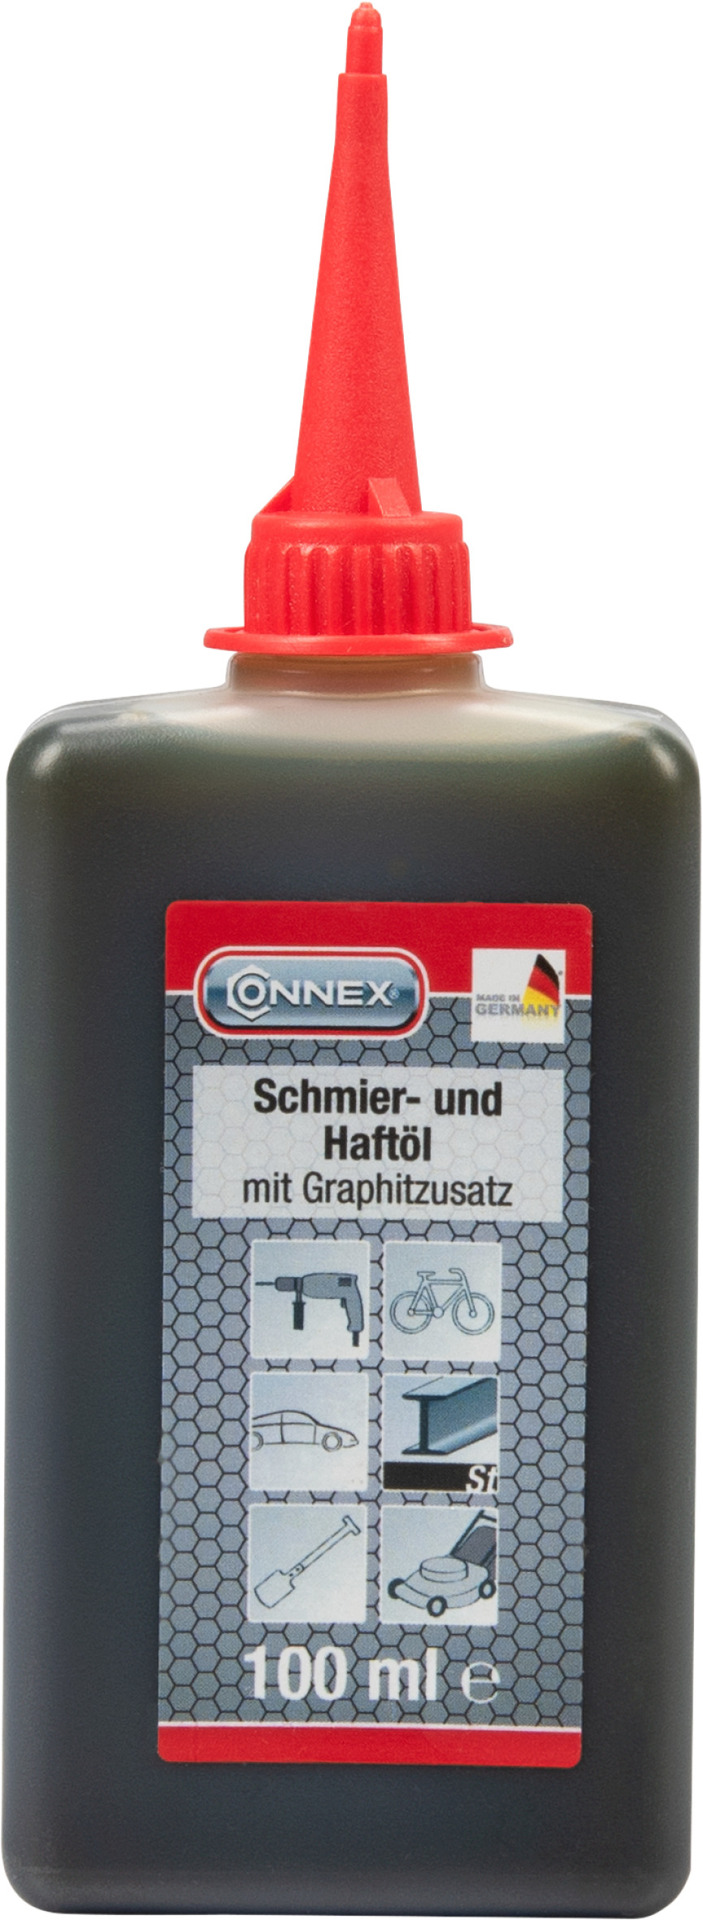 Conmetall Schmier- und Haftöl 100ml